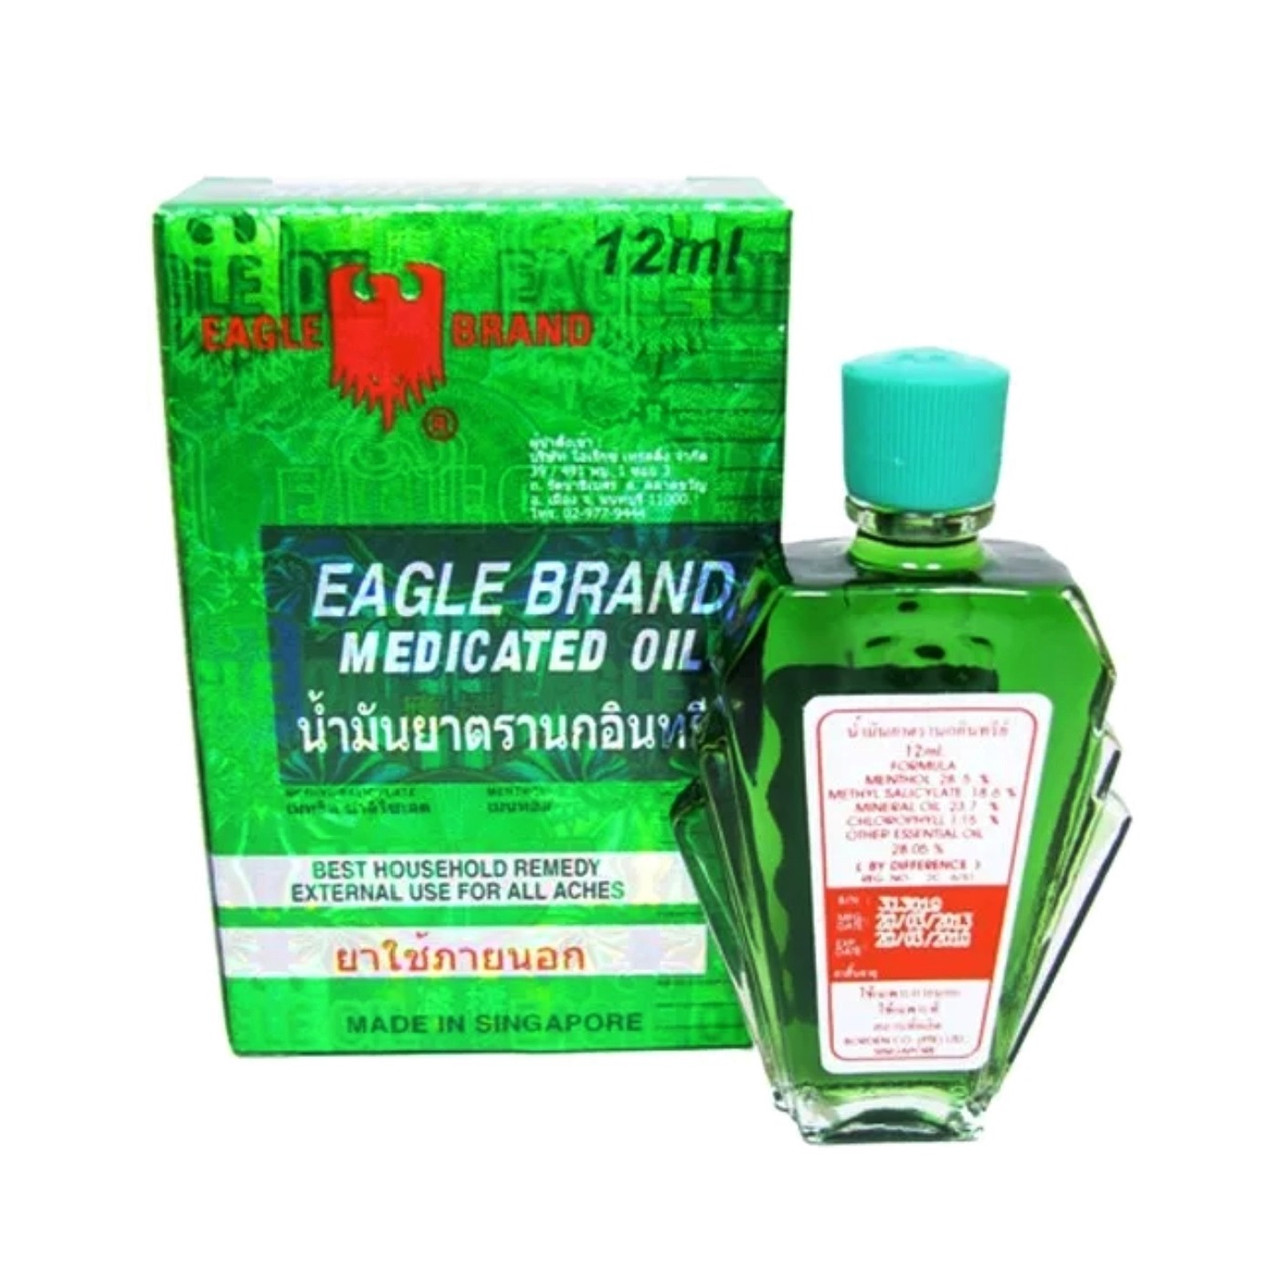 Масло лечебное зеленое с Хлорофиллом Eagle Brand Medicated Oil, 12 мл. Сингапур